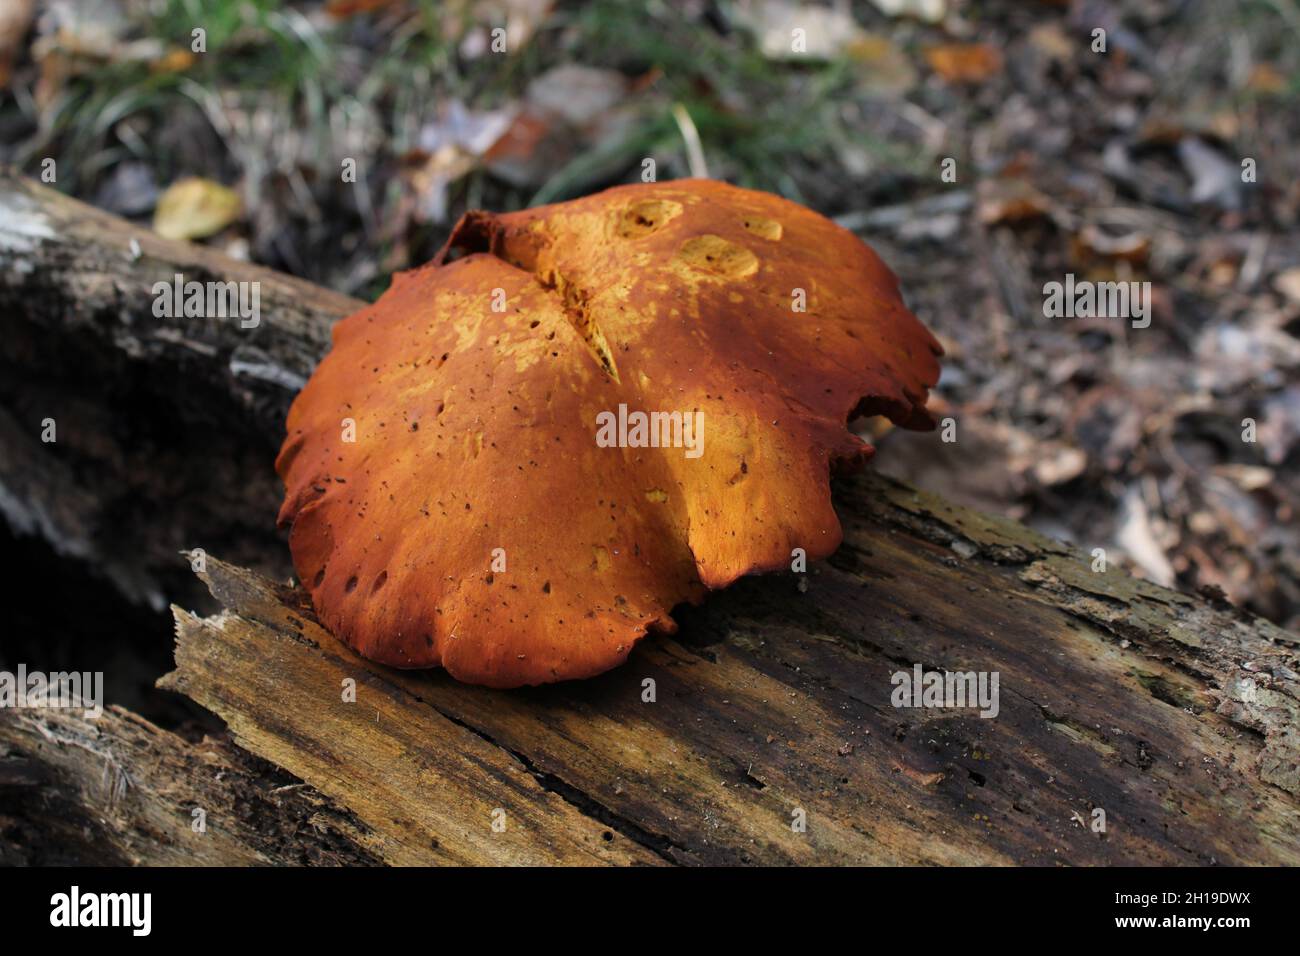 A Poisonous Jack-O-Lantern Mushroom on an Old Log Stock Photo